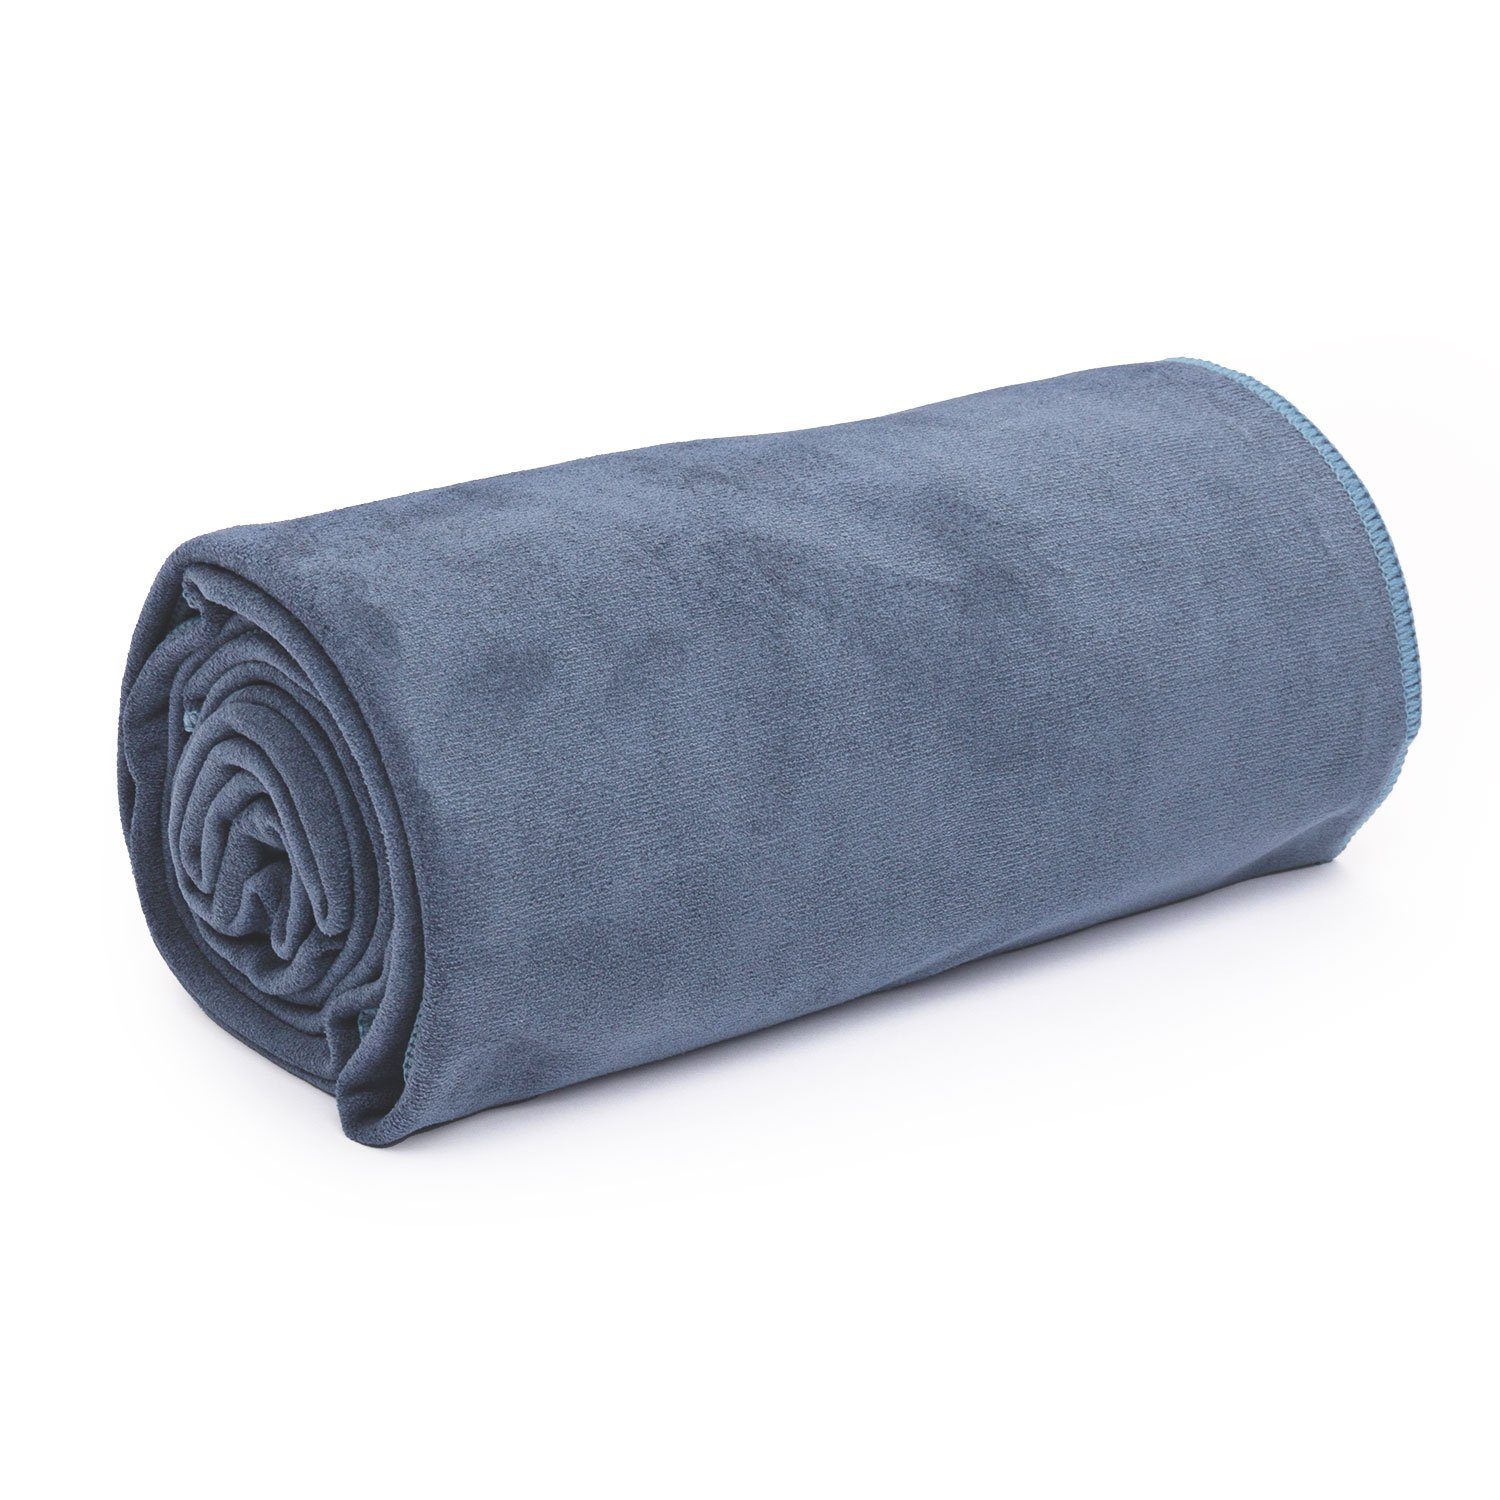 blue Sporthandtuch bodhi Towel L Yogamattenauflage FLOW moonlight